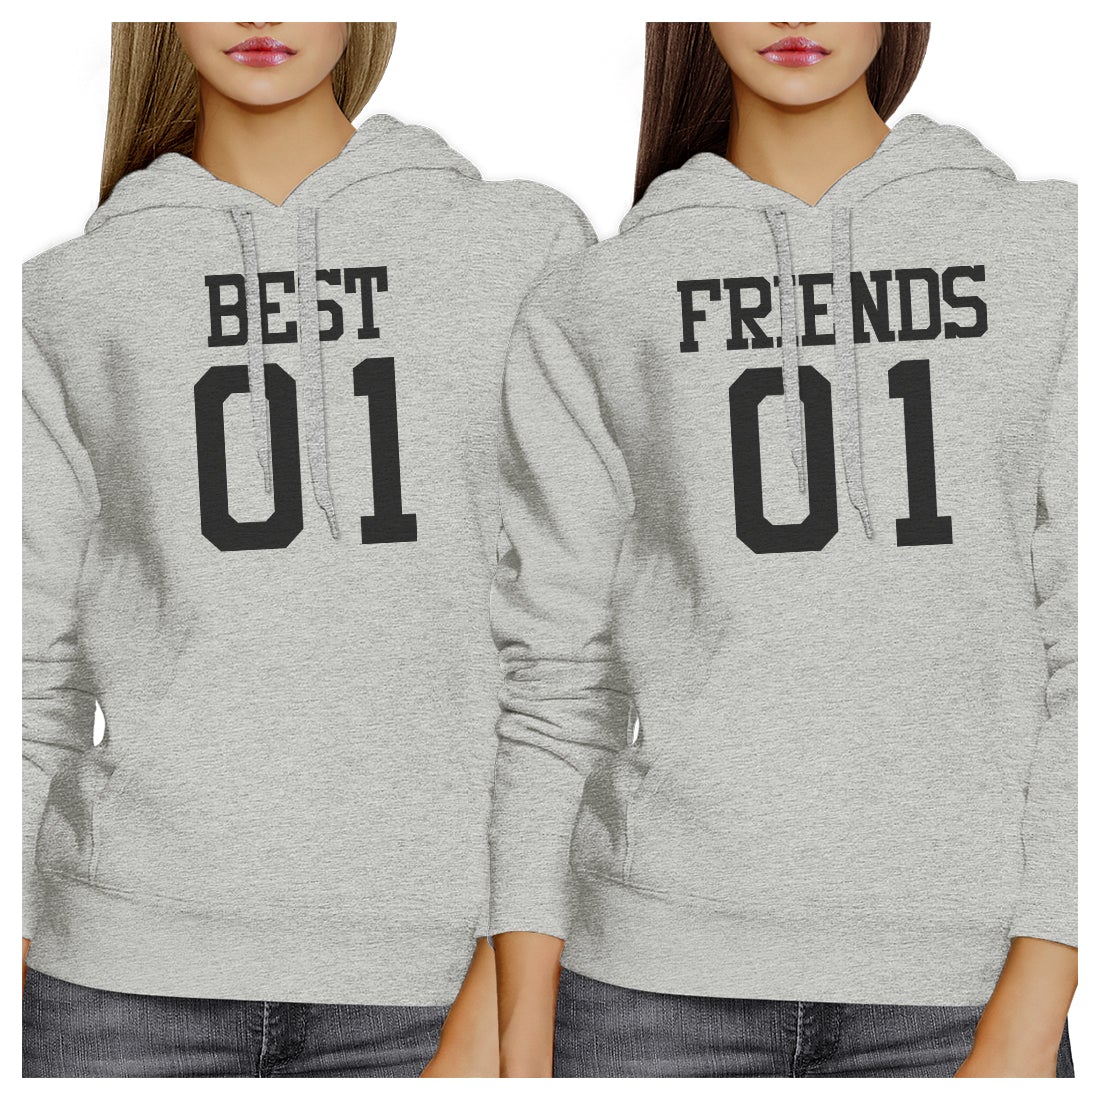 Best01 Friends01 BFF Matching Grey Hoodies